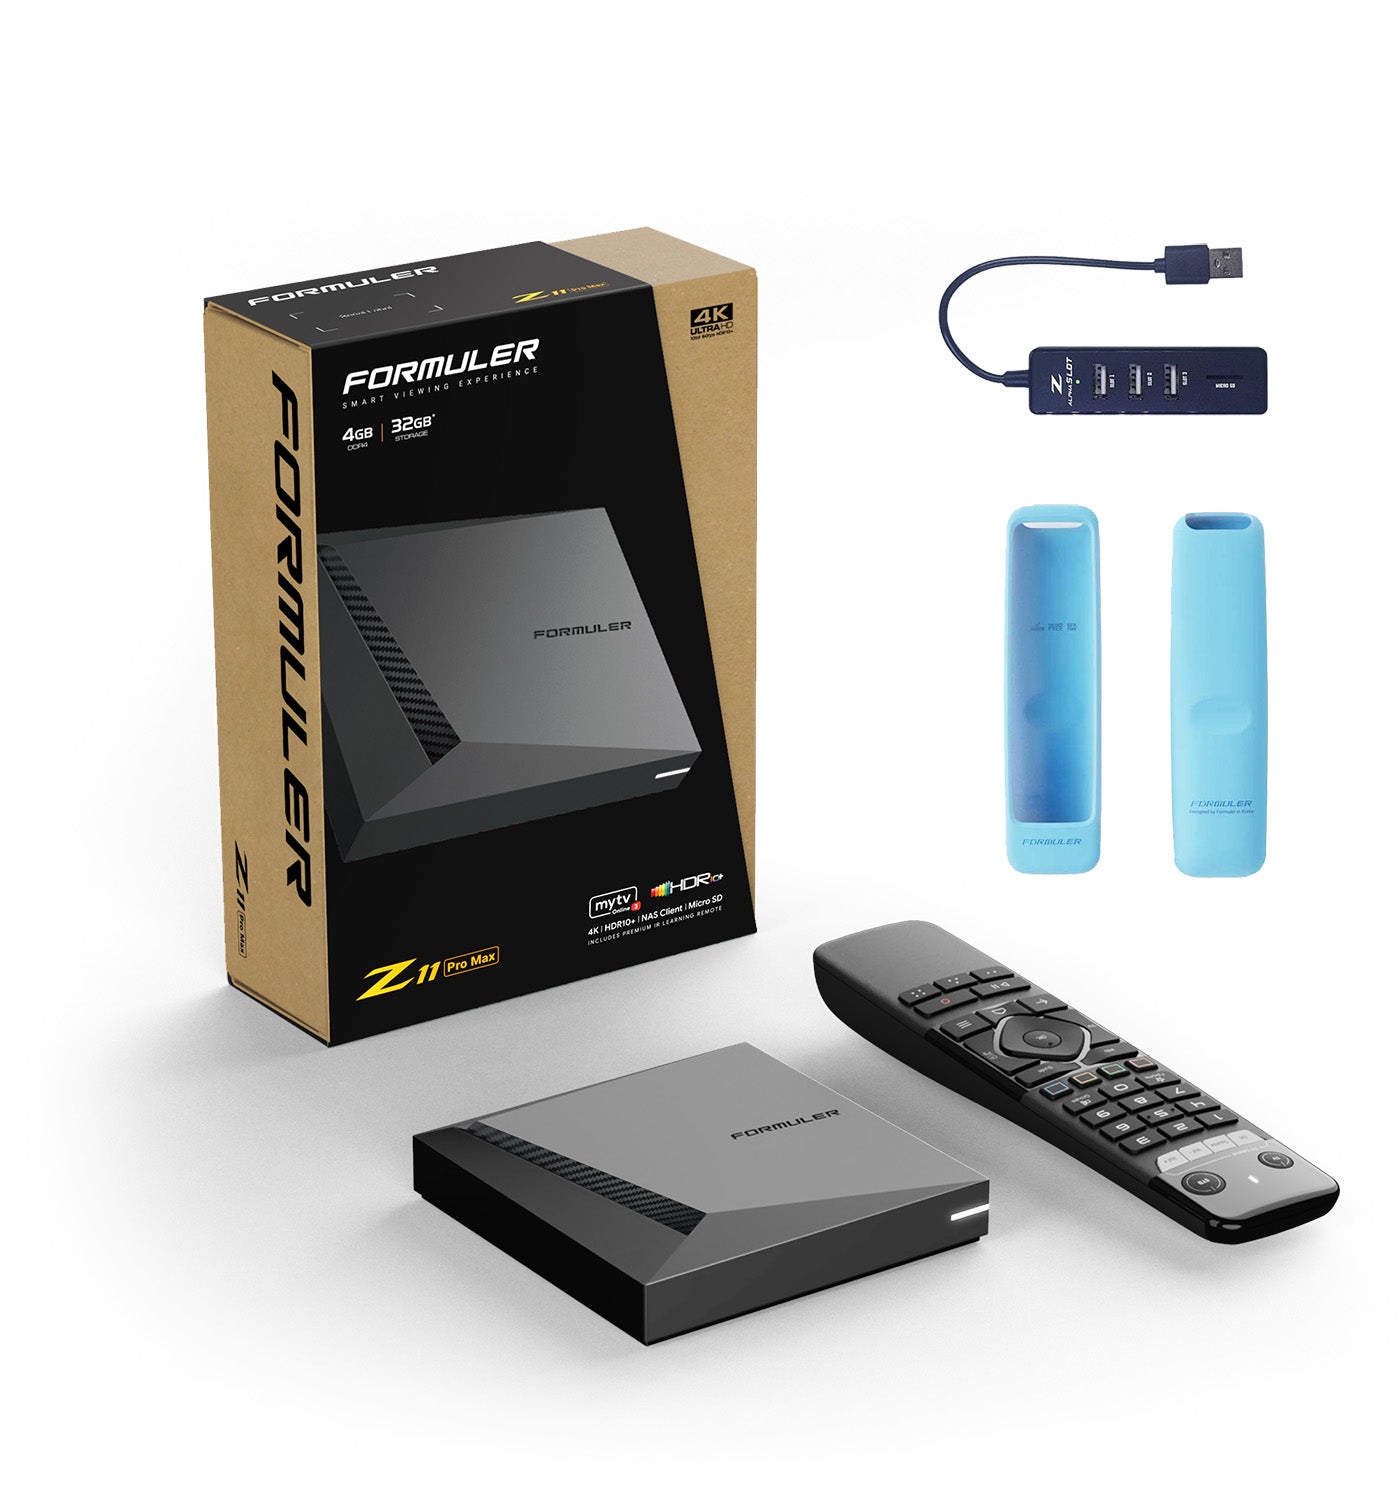 Formuler Z11 Pro Max + FREE ACCESSORIES: 1x BLUE remote cover + 1x USB Hub